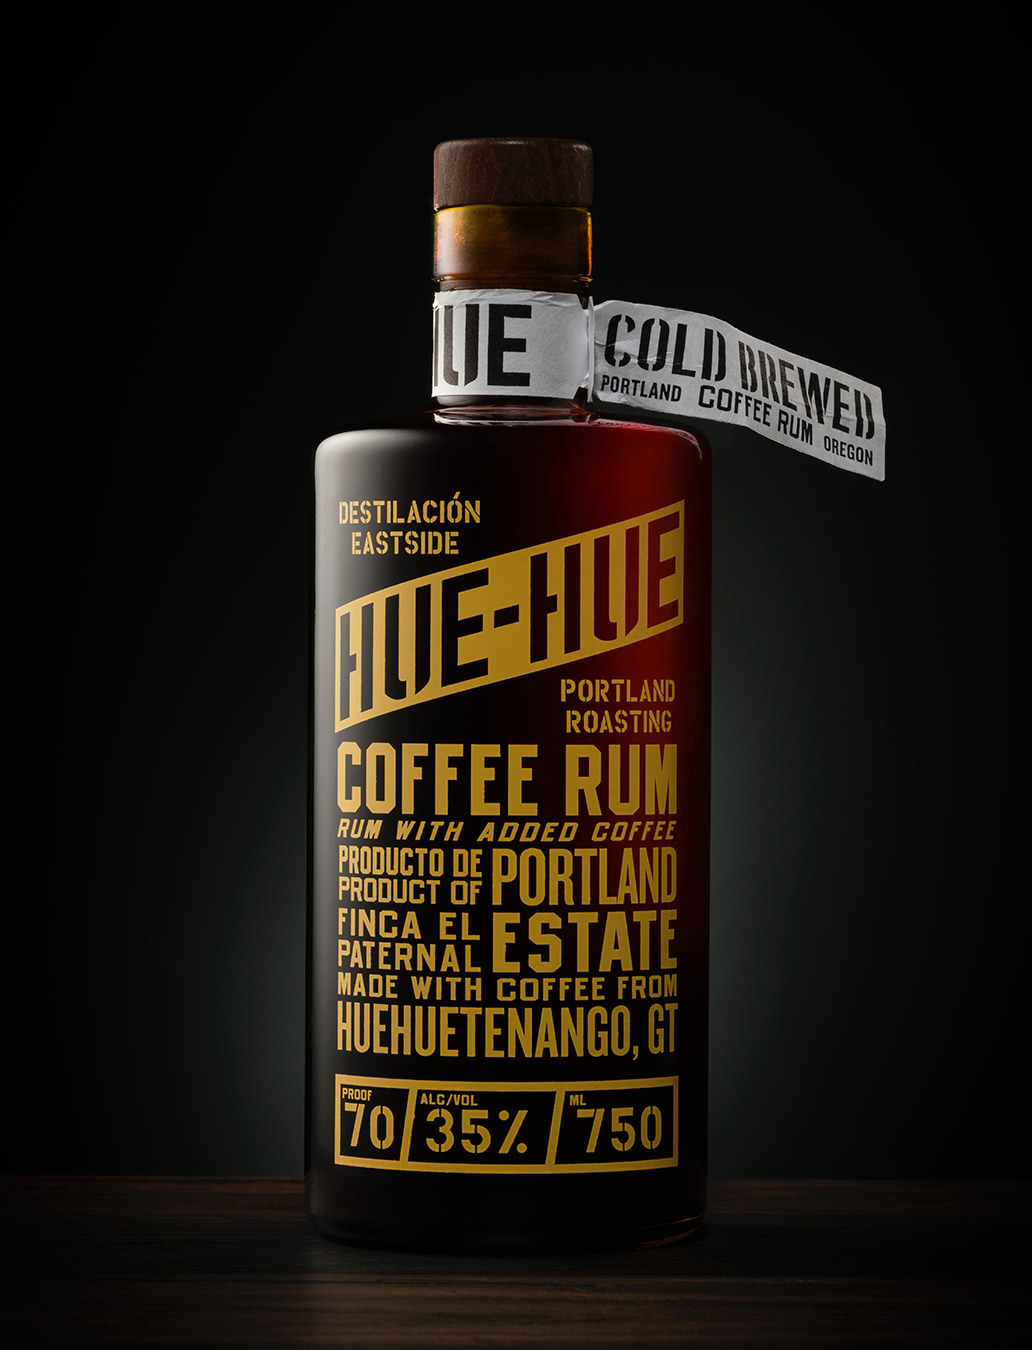 Hue-Hue Coffee Rum - spirits bottle design